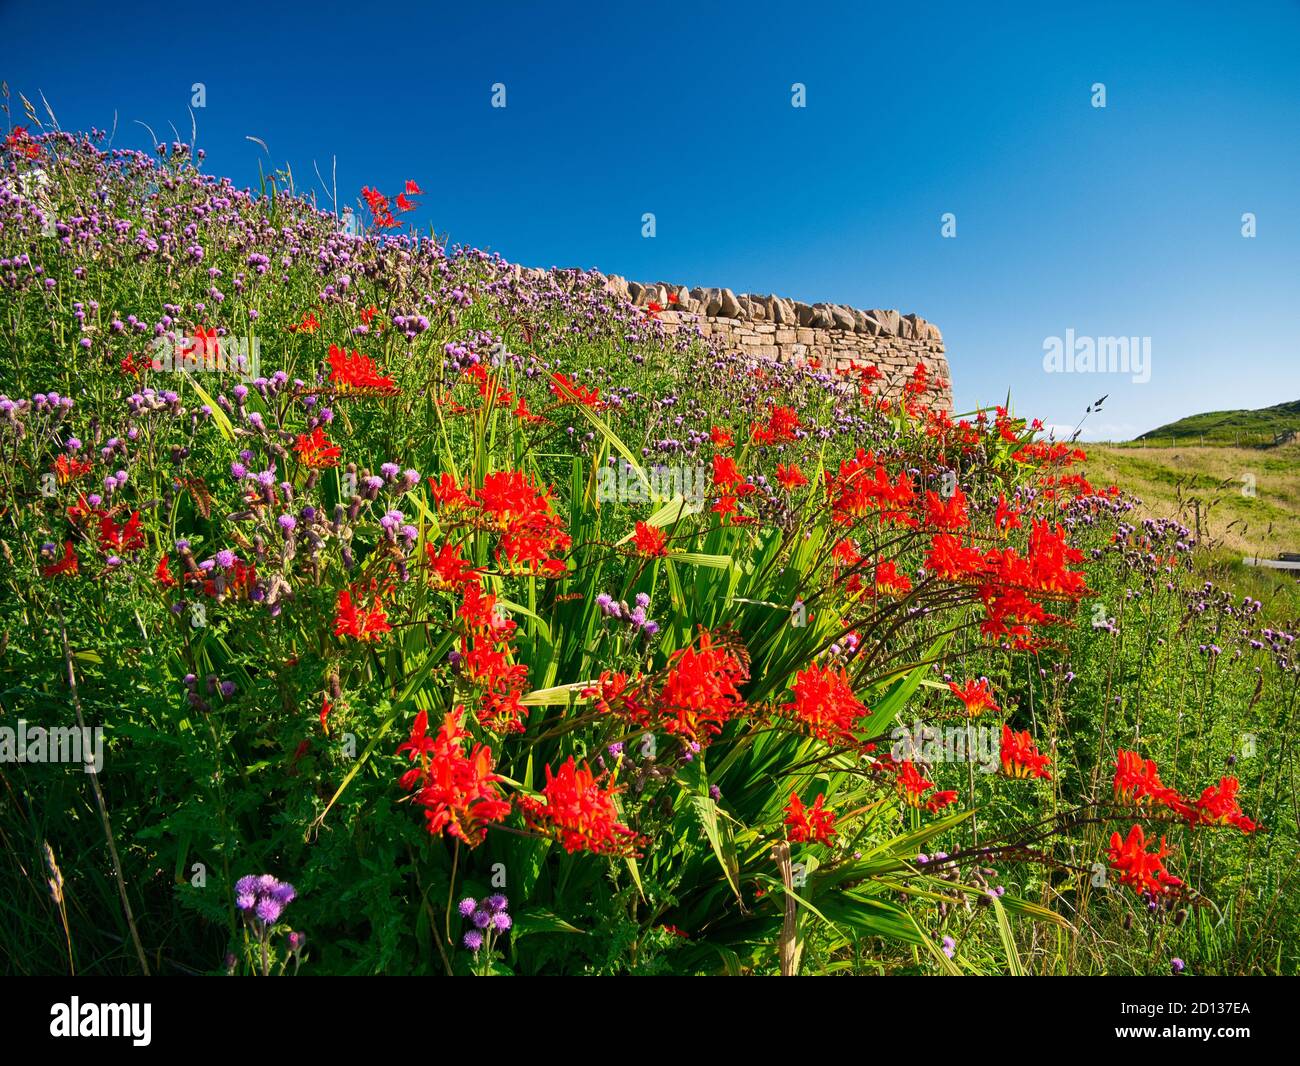 Growing wild near Hamnavoe in Shetland, Scotland, UK the red flowers of alstroemeria among wild flowers. Stock Photo